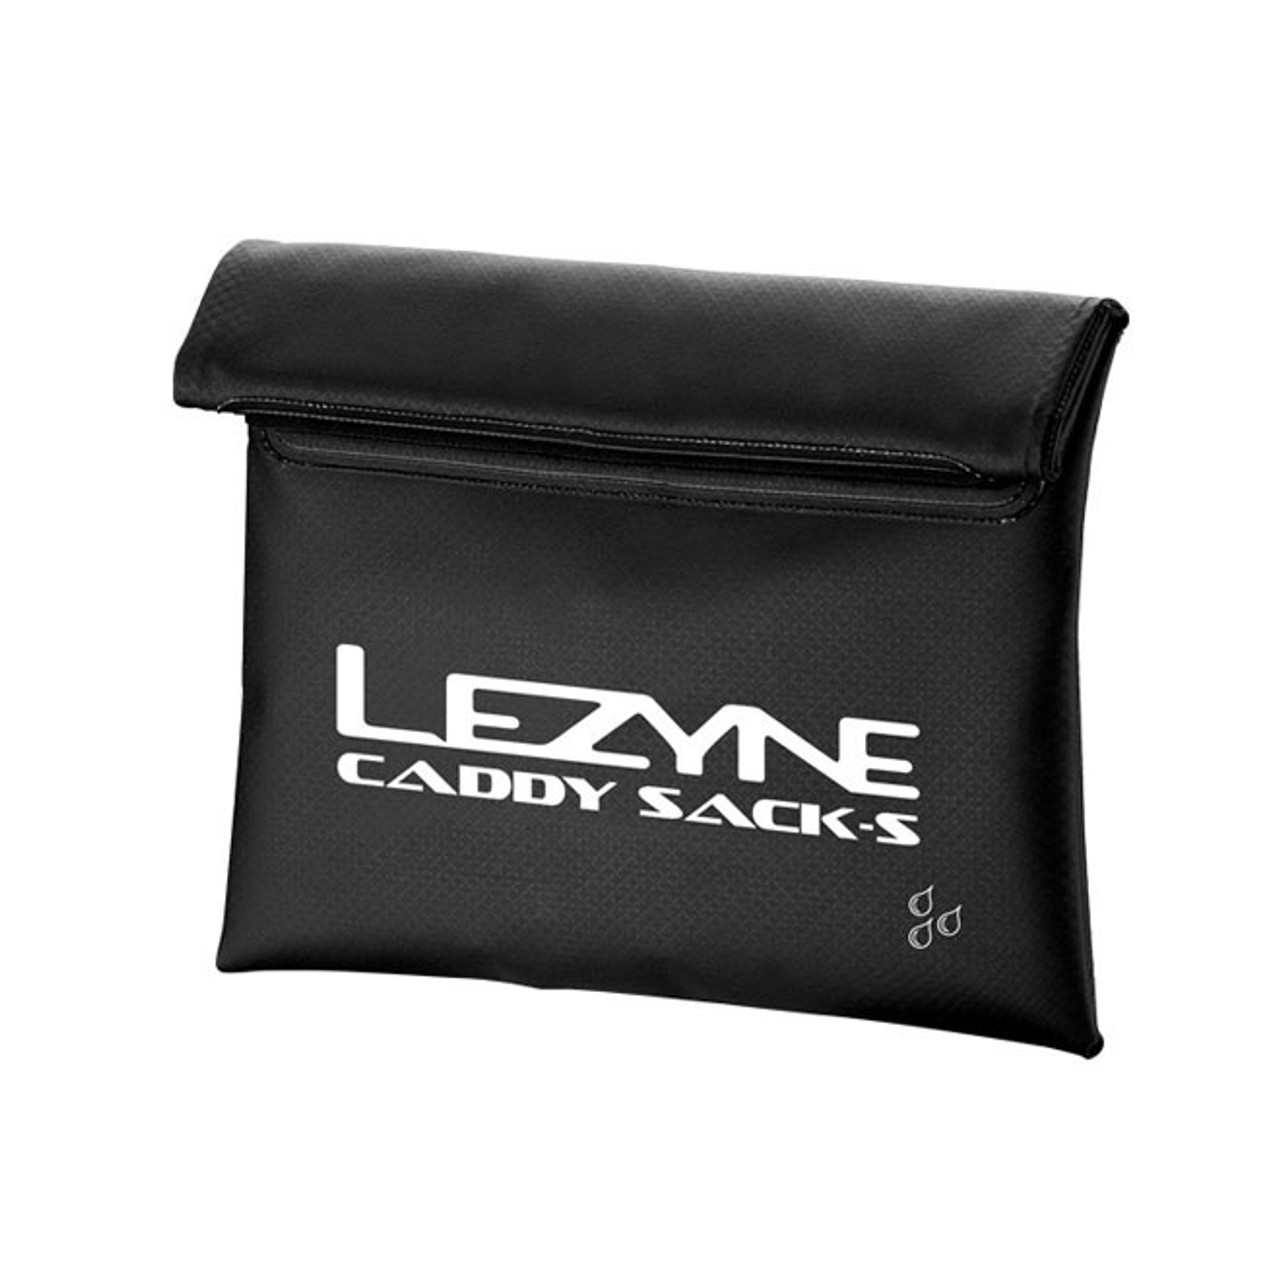 Lezyne Caddy Sack - All sizes